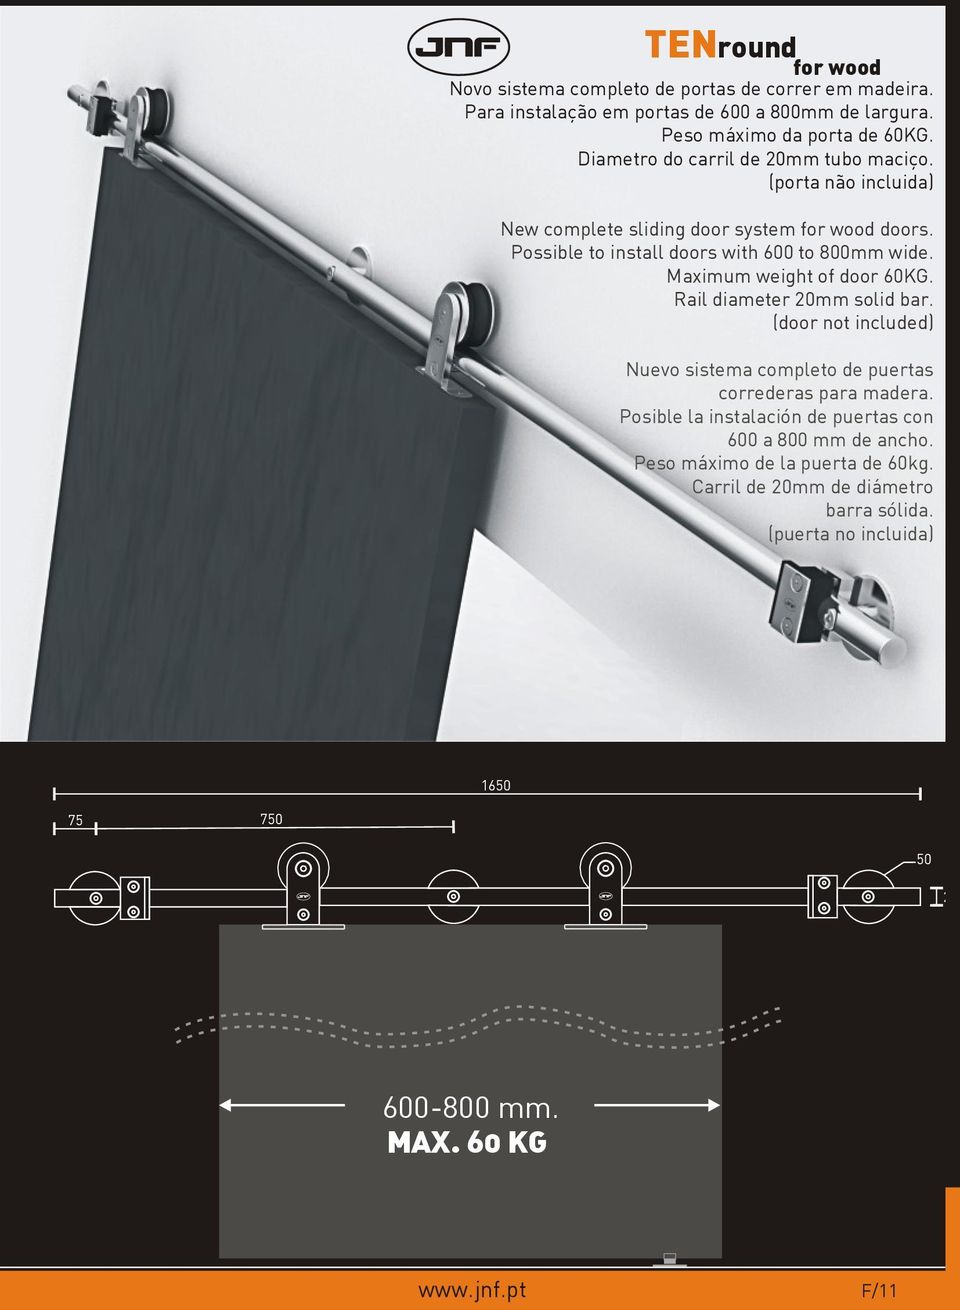 Maximum weight of door 60KG. Rail diameter 20mm solid bar. (door not included) Nuevo sistema completo de puertas correderas para madera.